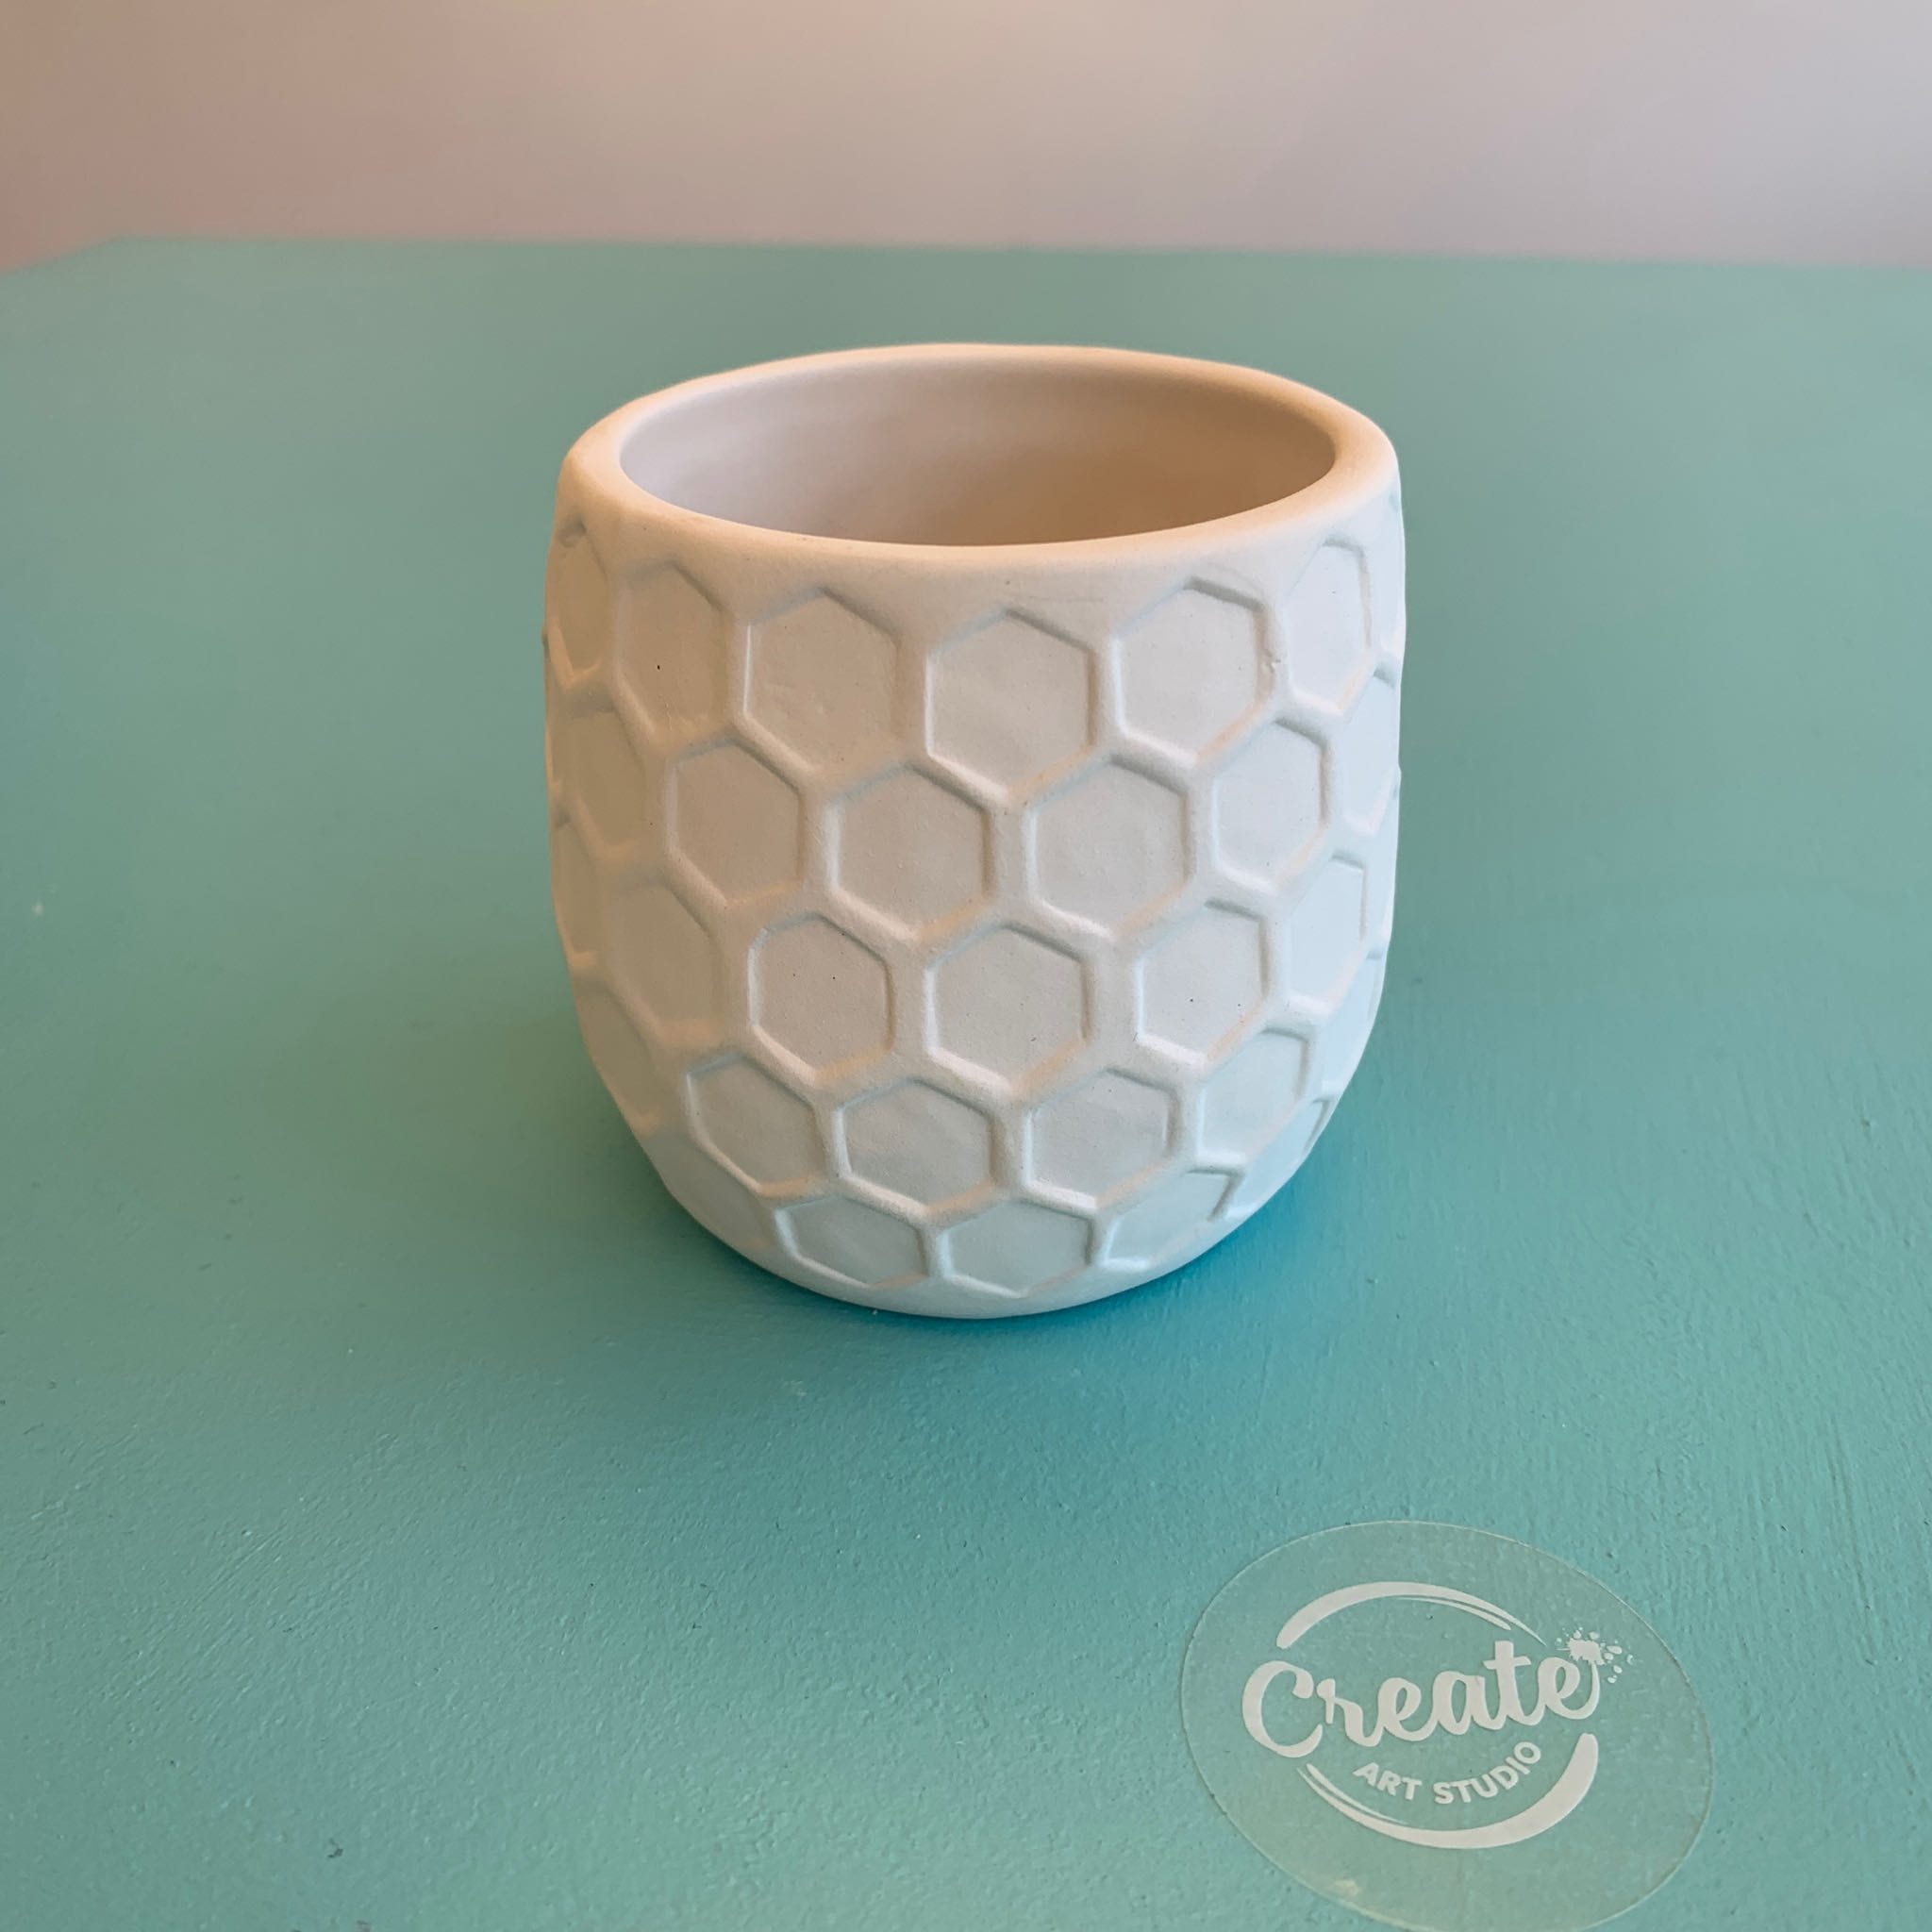 Custom painted pottery honeycomb planter vase ceramic paint at home kit from Create Art Studio